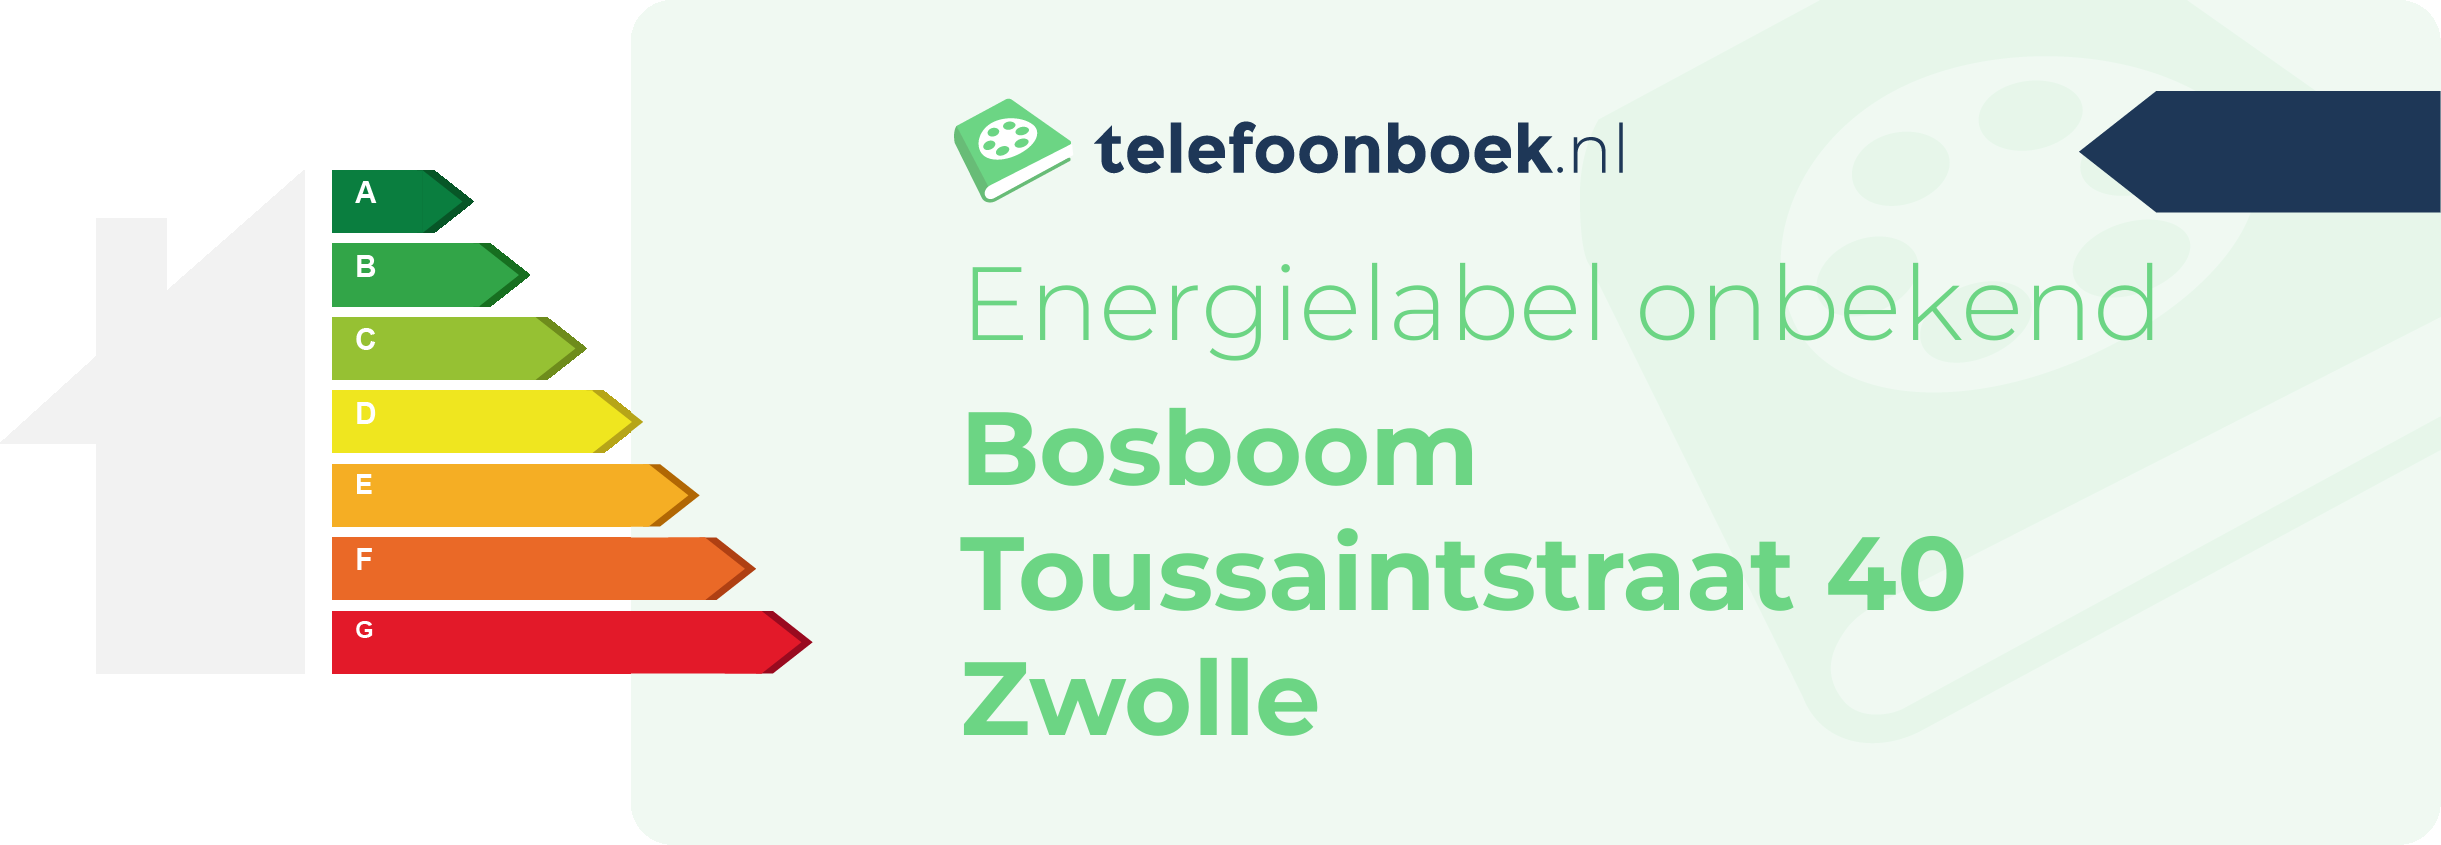 Energielabel Bosboom Toussaintstraat 40 Zwolle